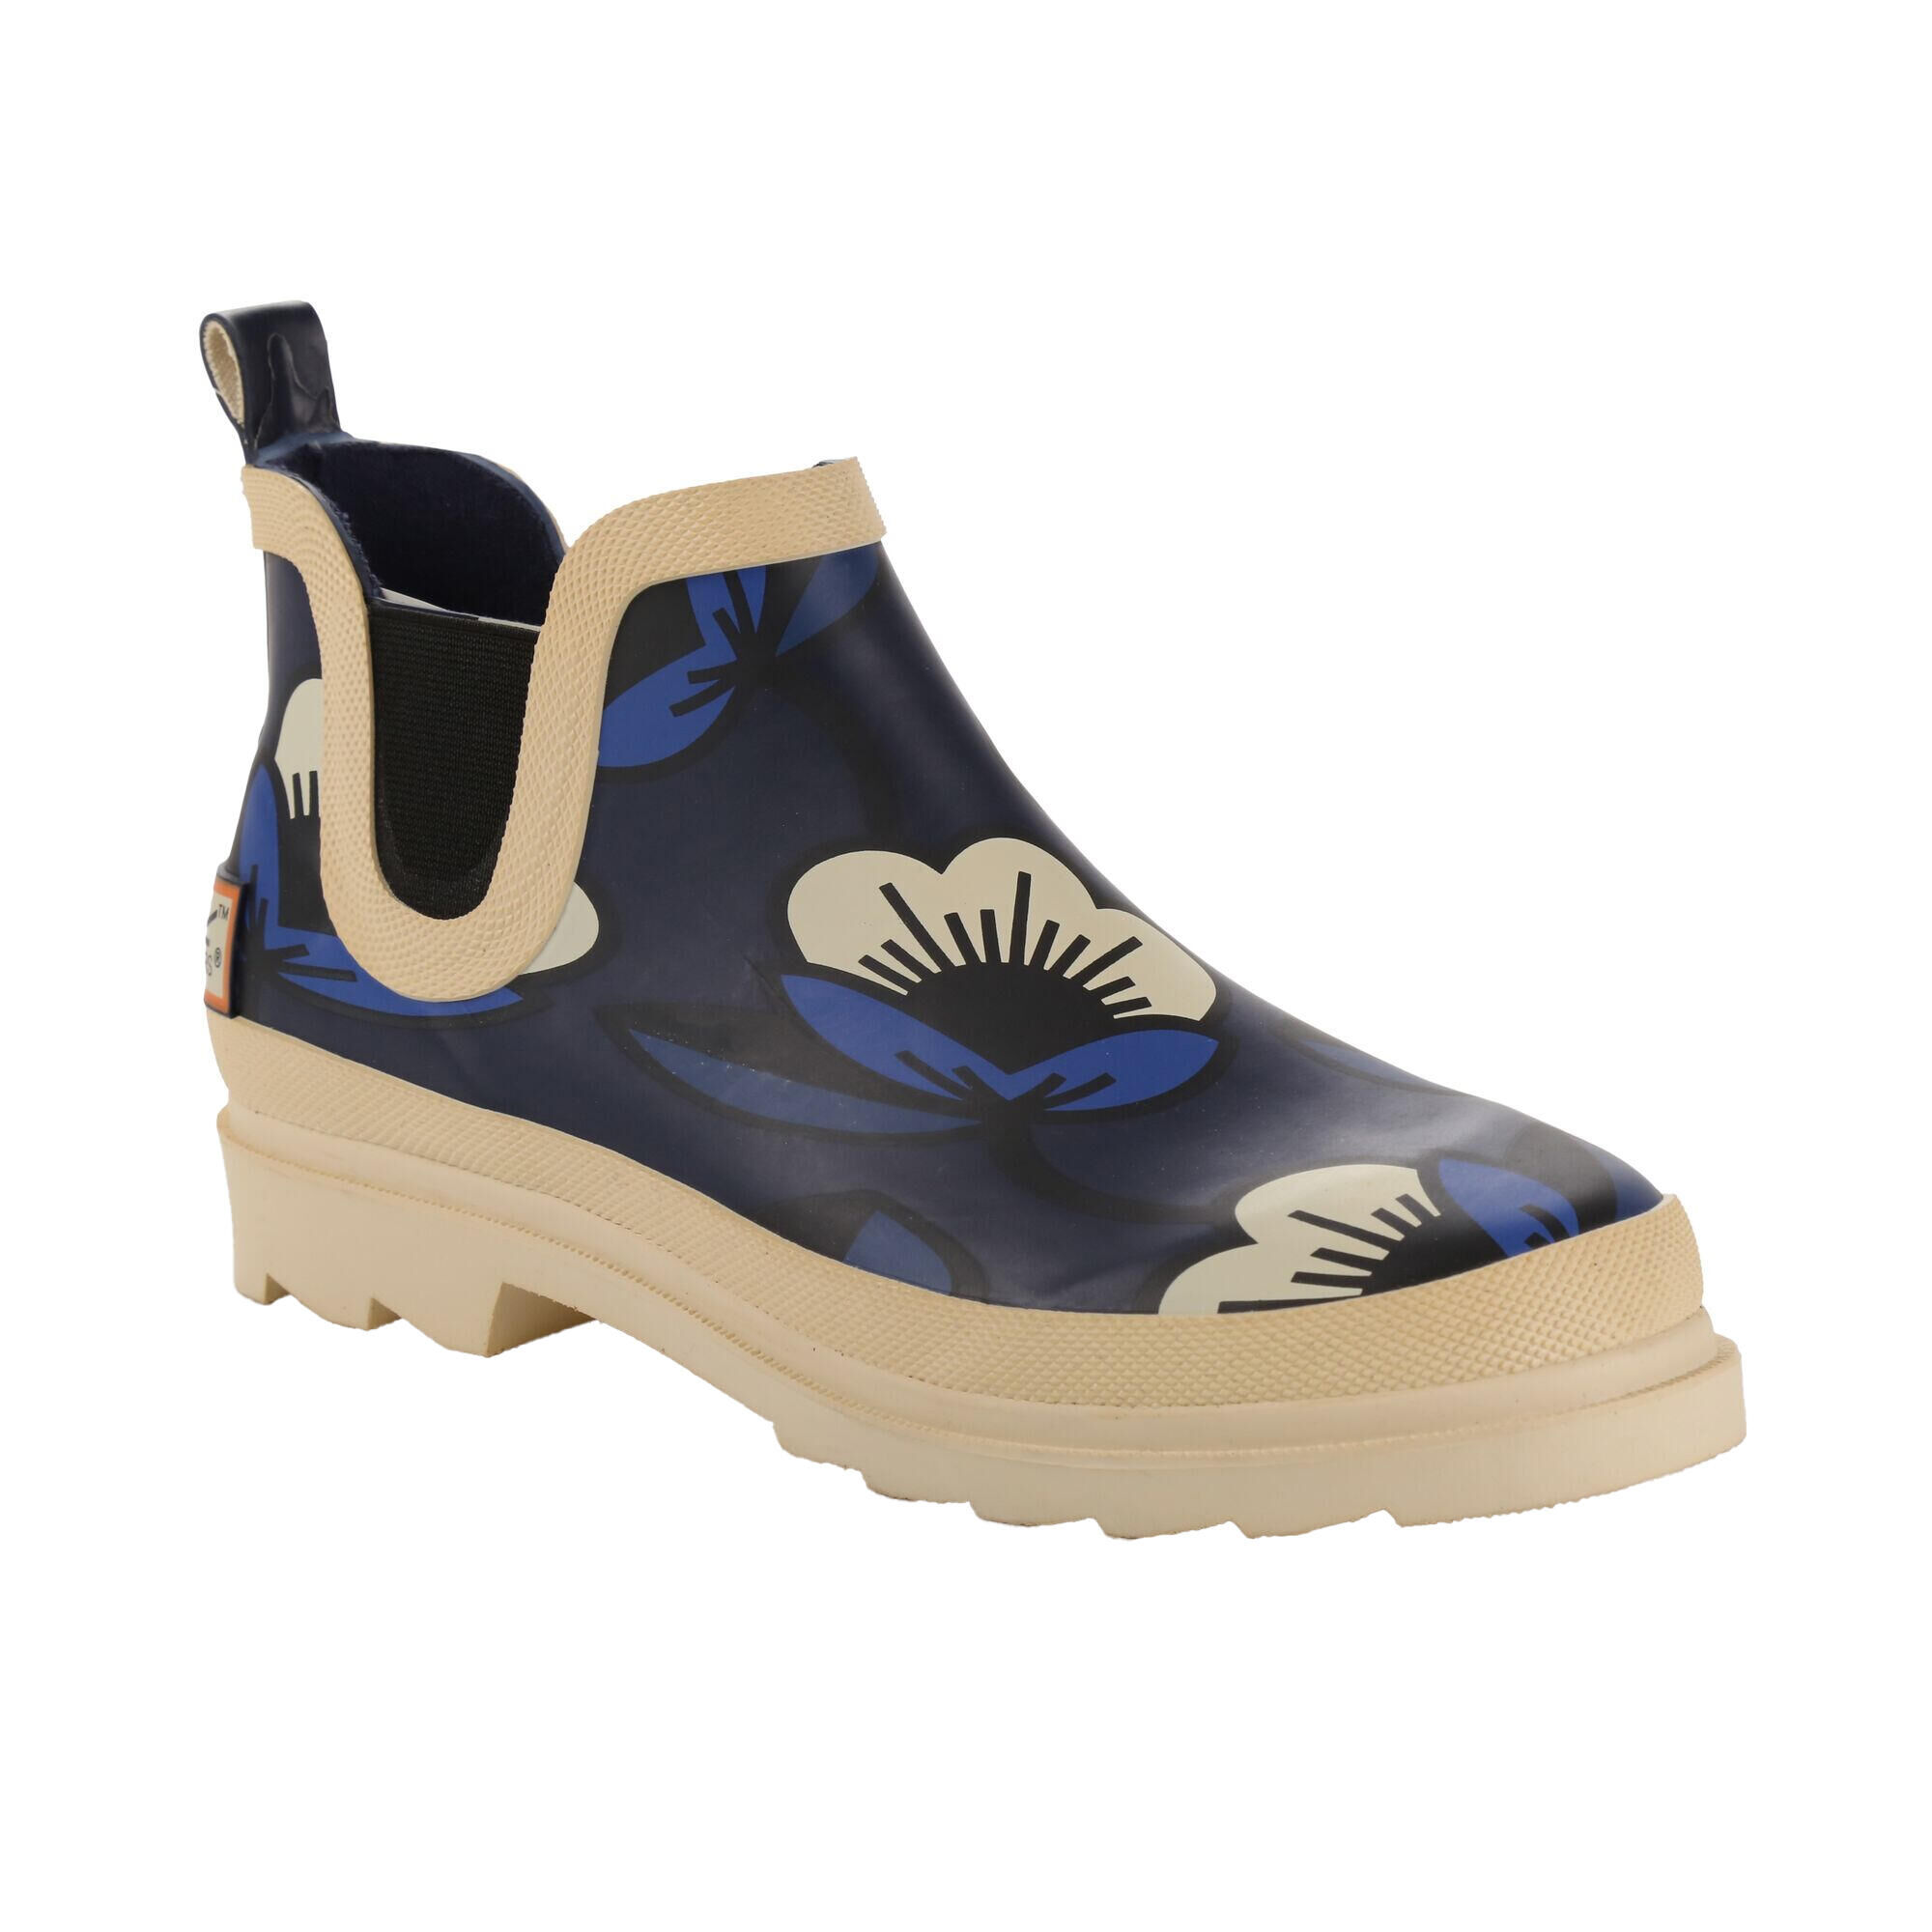 REGATTA Womens/Ladies Orla Kiely Passion Flower Wellington Boots (Navy/Cream)